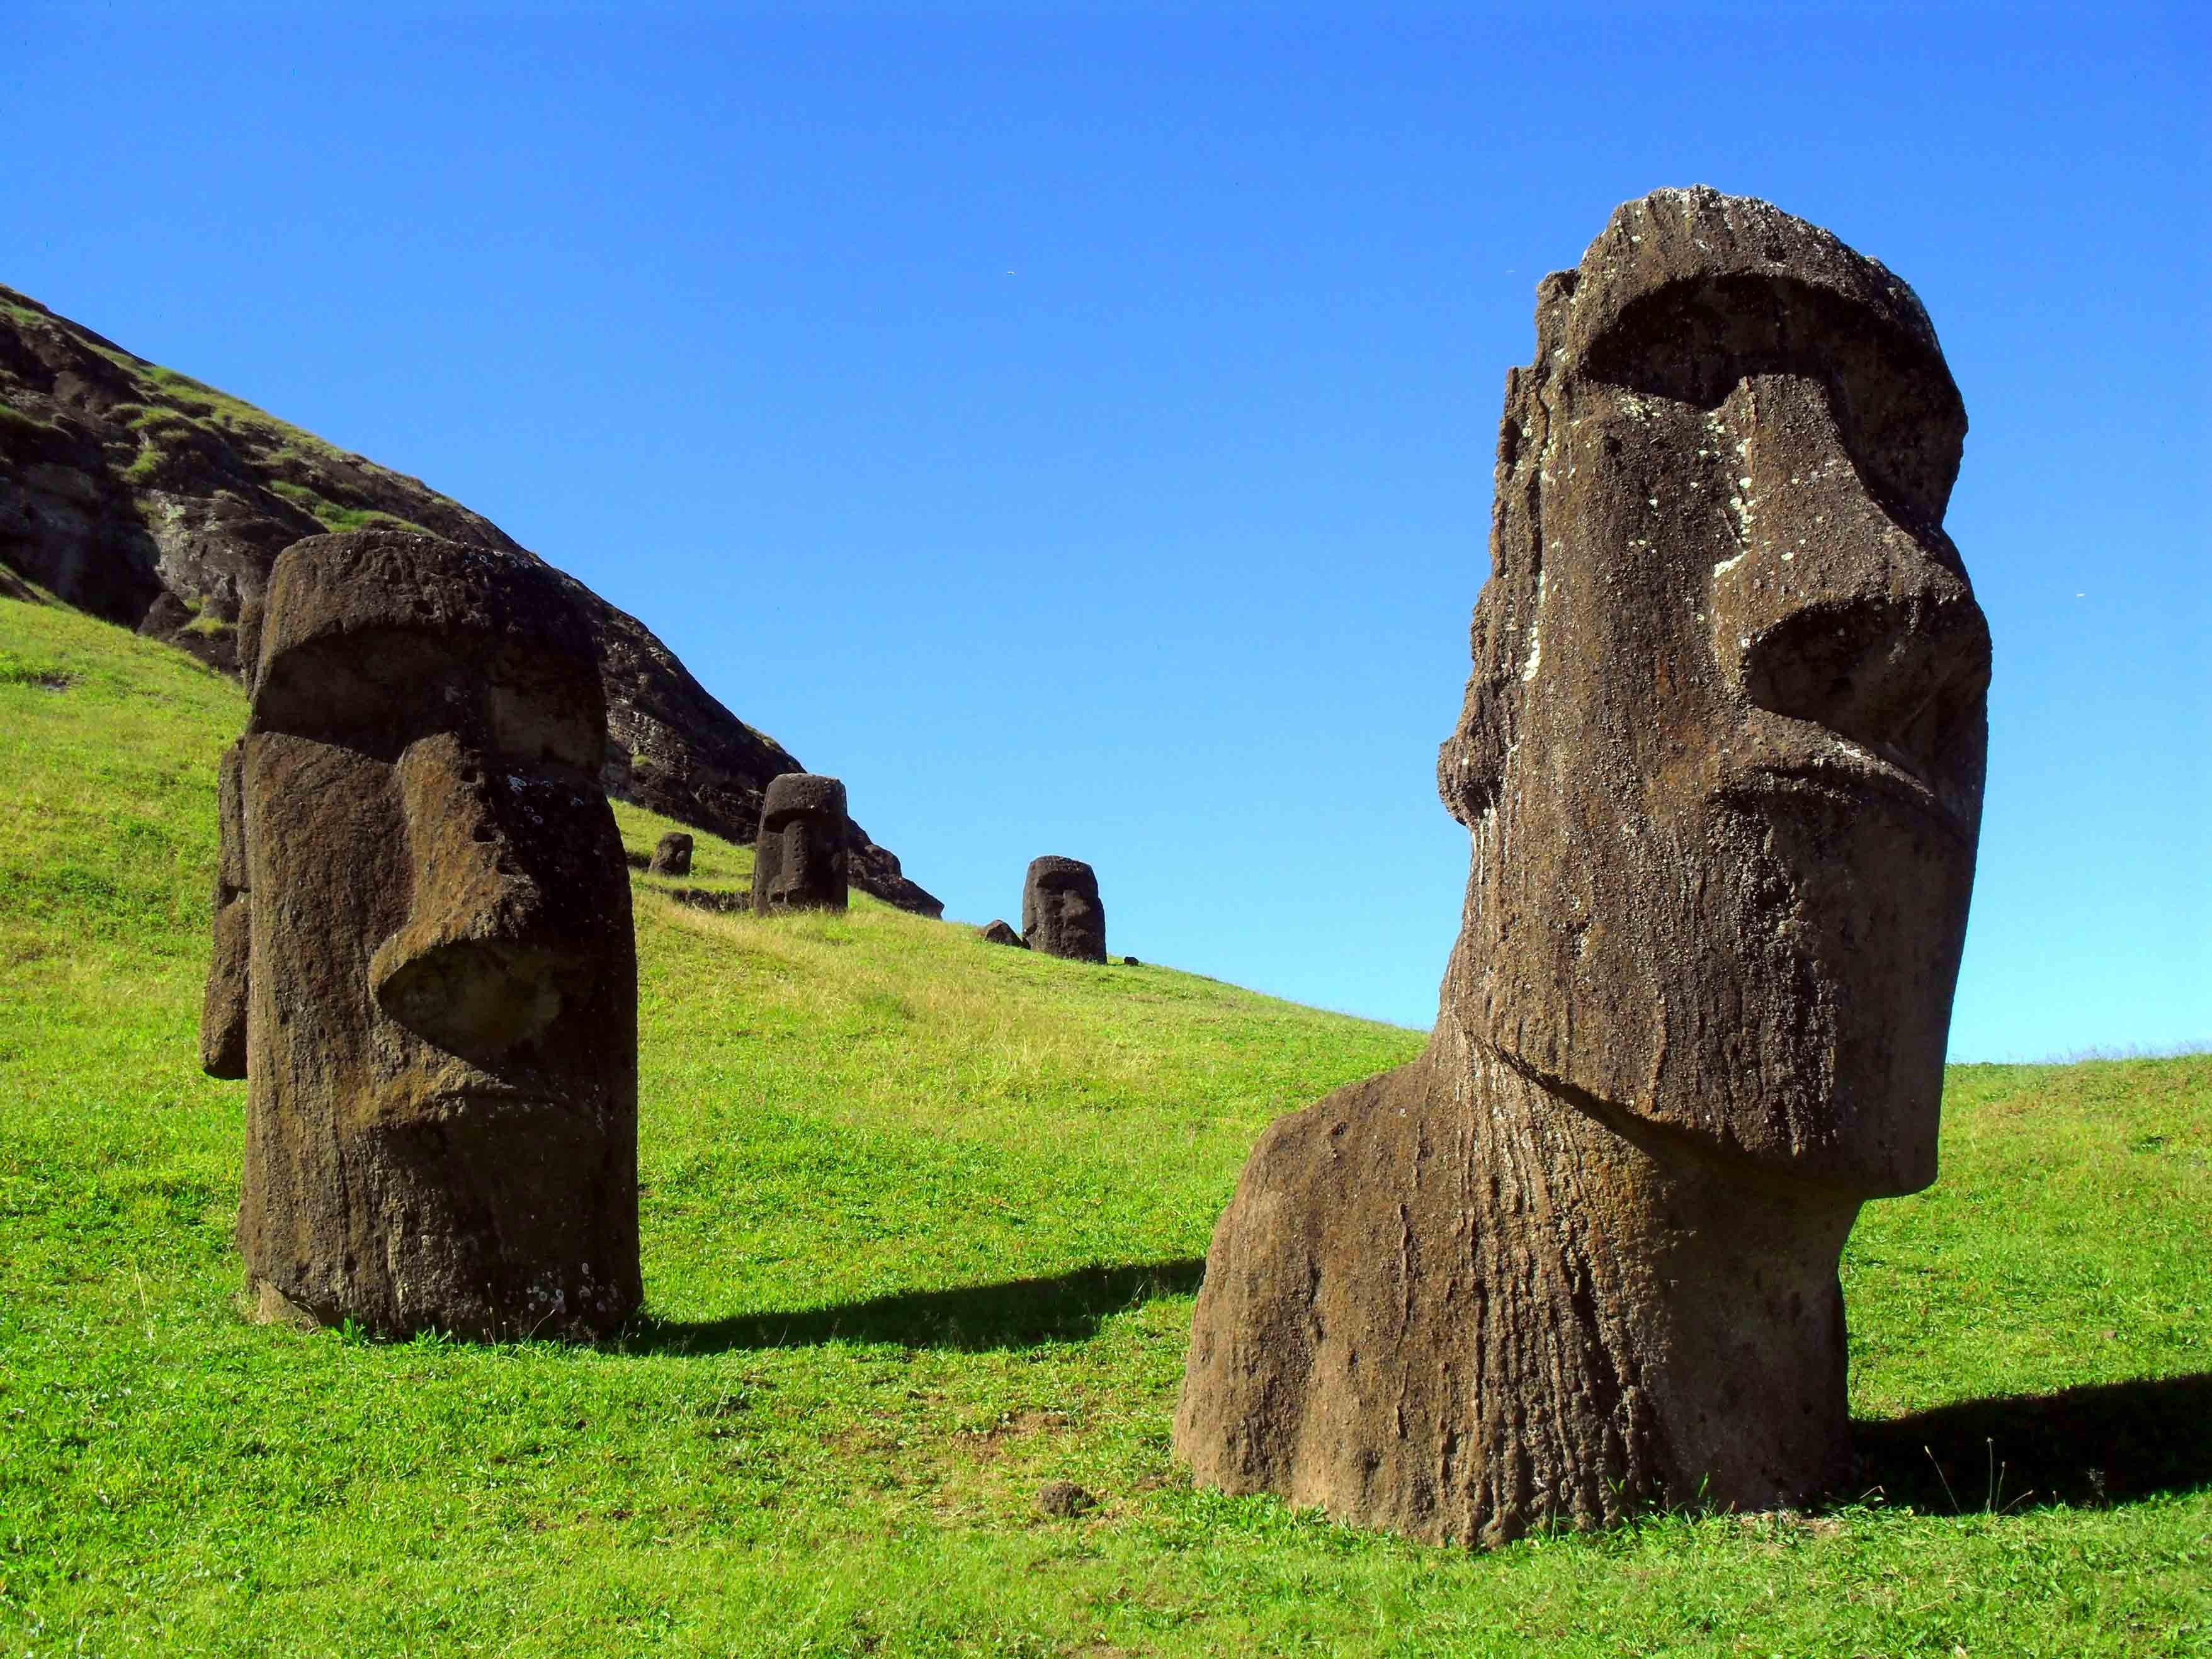 Памятники природы чили. Моаи (статуи острова Пасхи), Чили. Каменные статуи Моаи остров Пасхи Чили. Истуканы Рапа-Нуи остров Пасхи. Статуи Моаи в Чили.